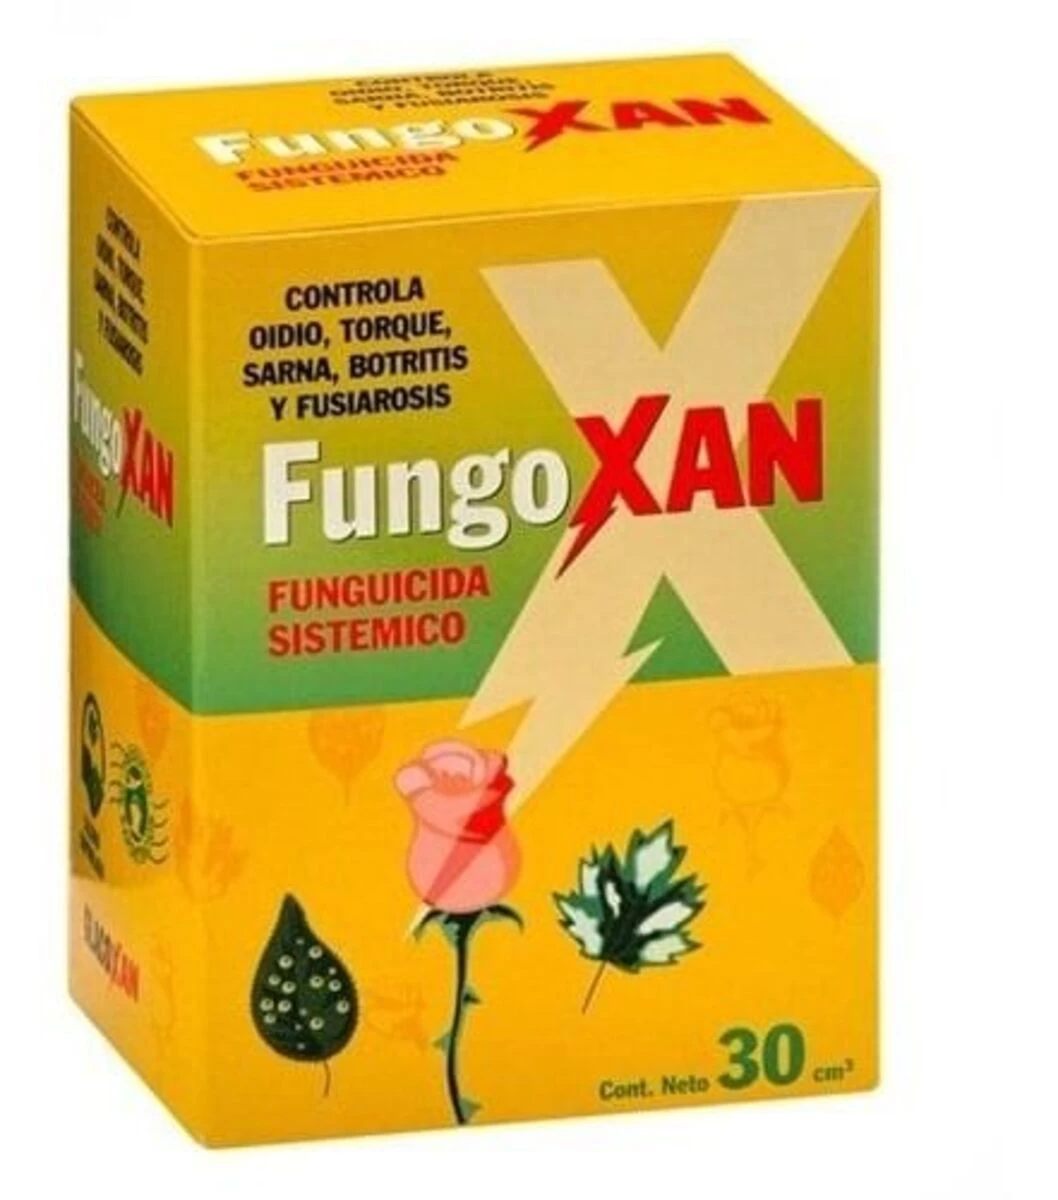 fungoxan-funguicida-sistemico-30cm3